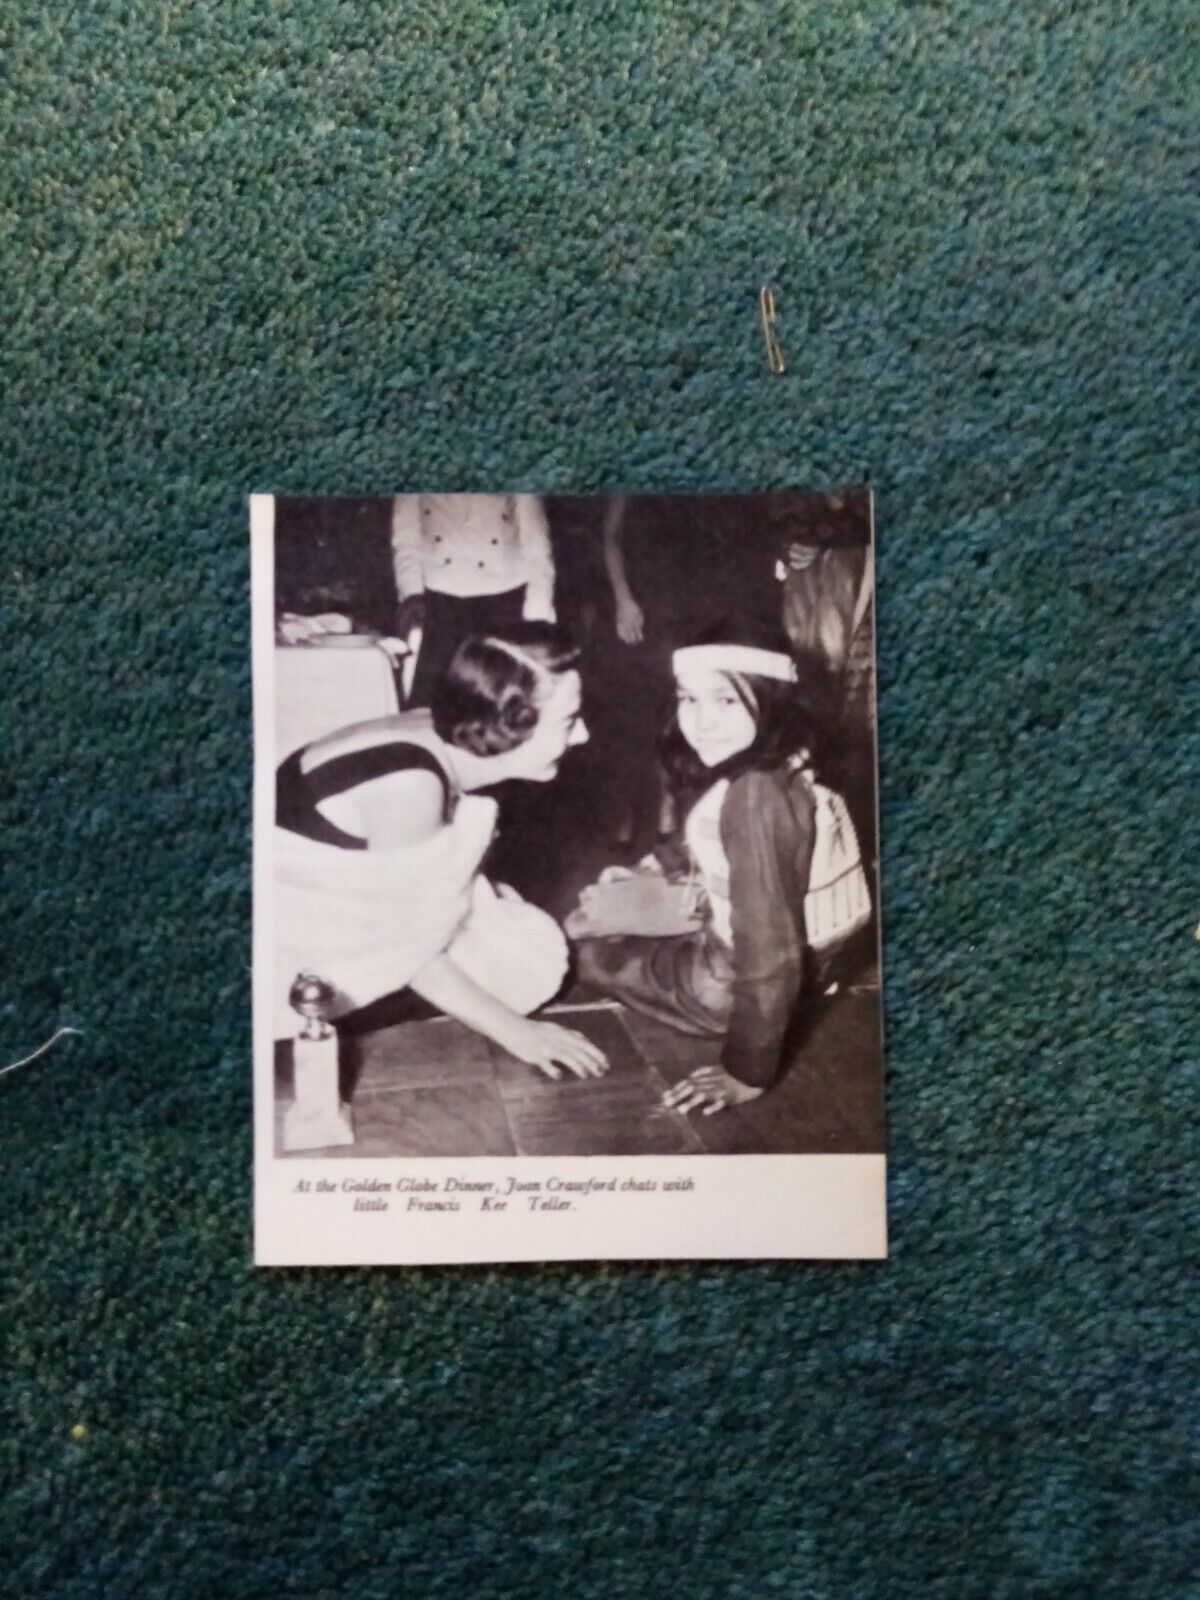 Kvc25 Ephemera 1950s film picture Joan Crawford Francis kee teller 